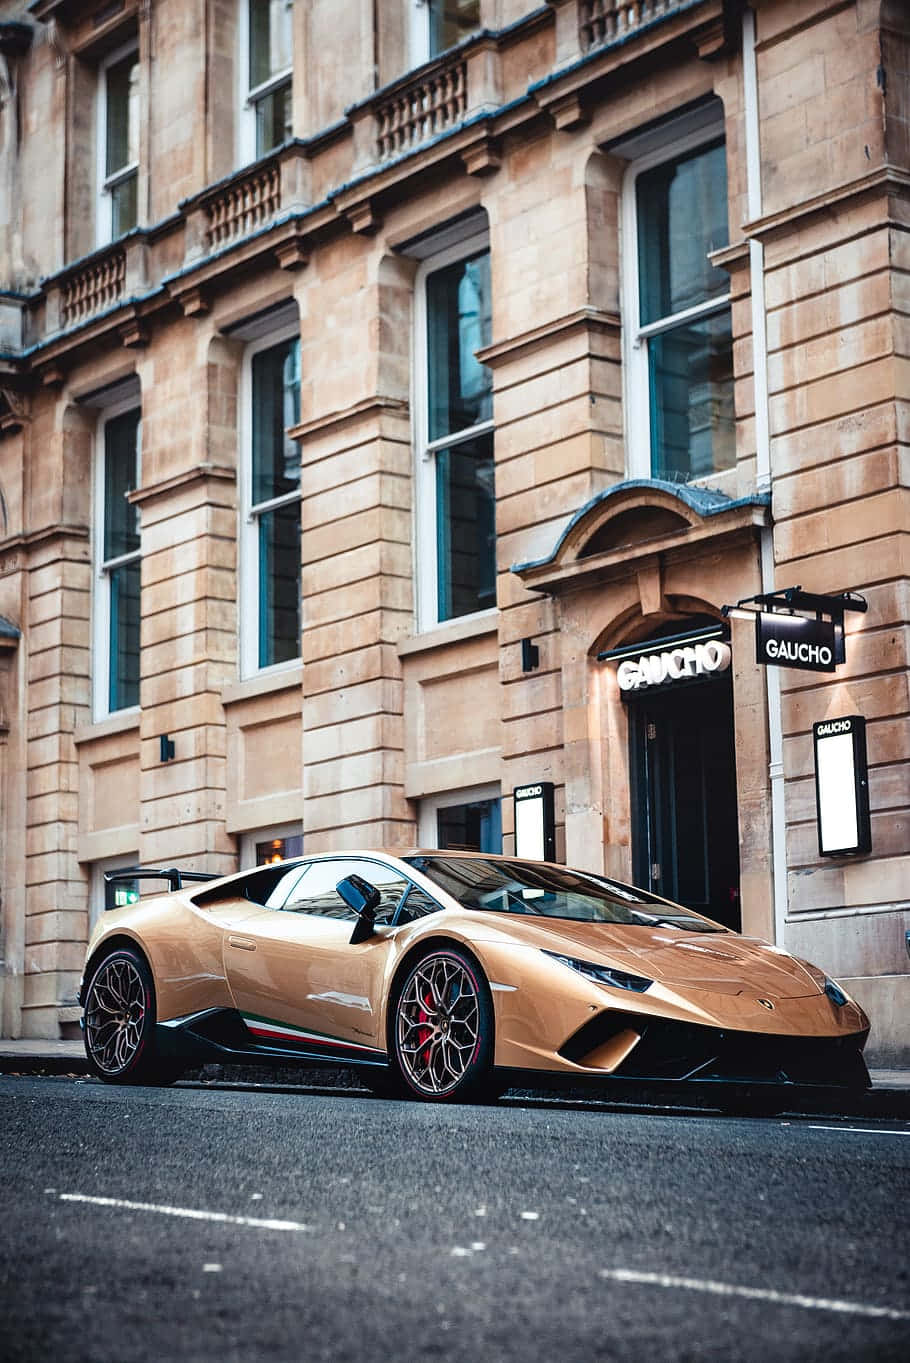 Eingoldener Lamborghini, Der Am Straßenrand Parkt. Wallpaper